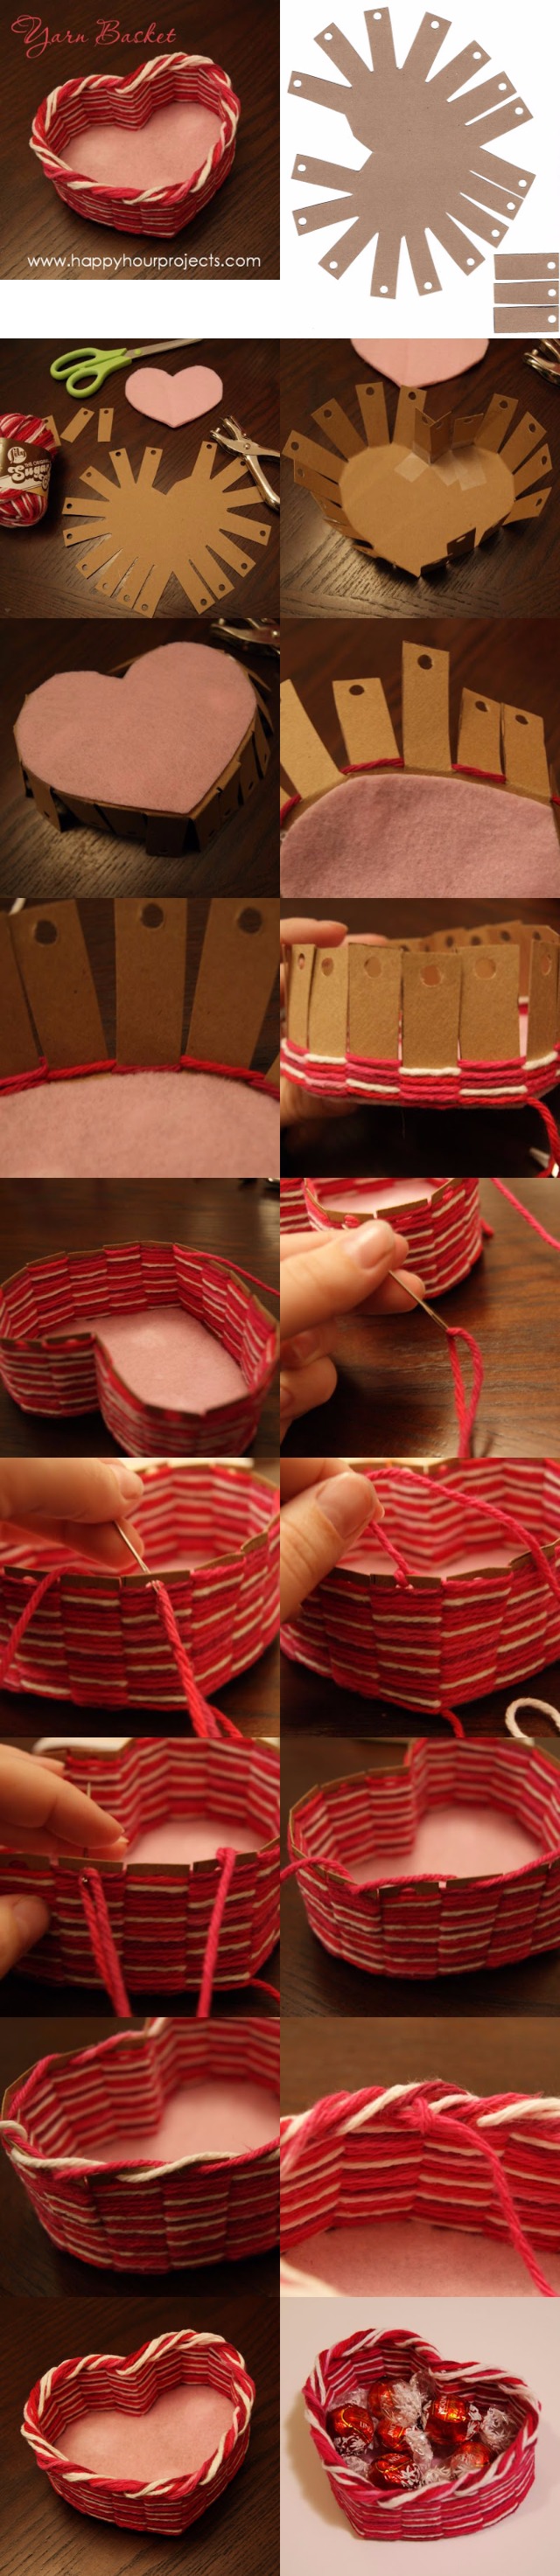 9-heart-shaped-yarn-basket